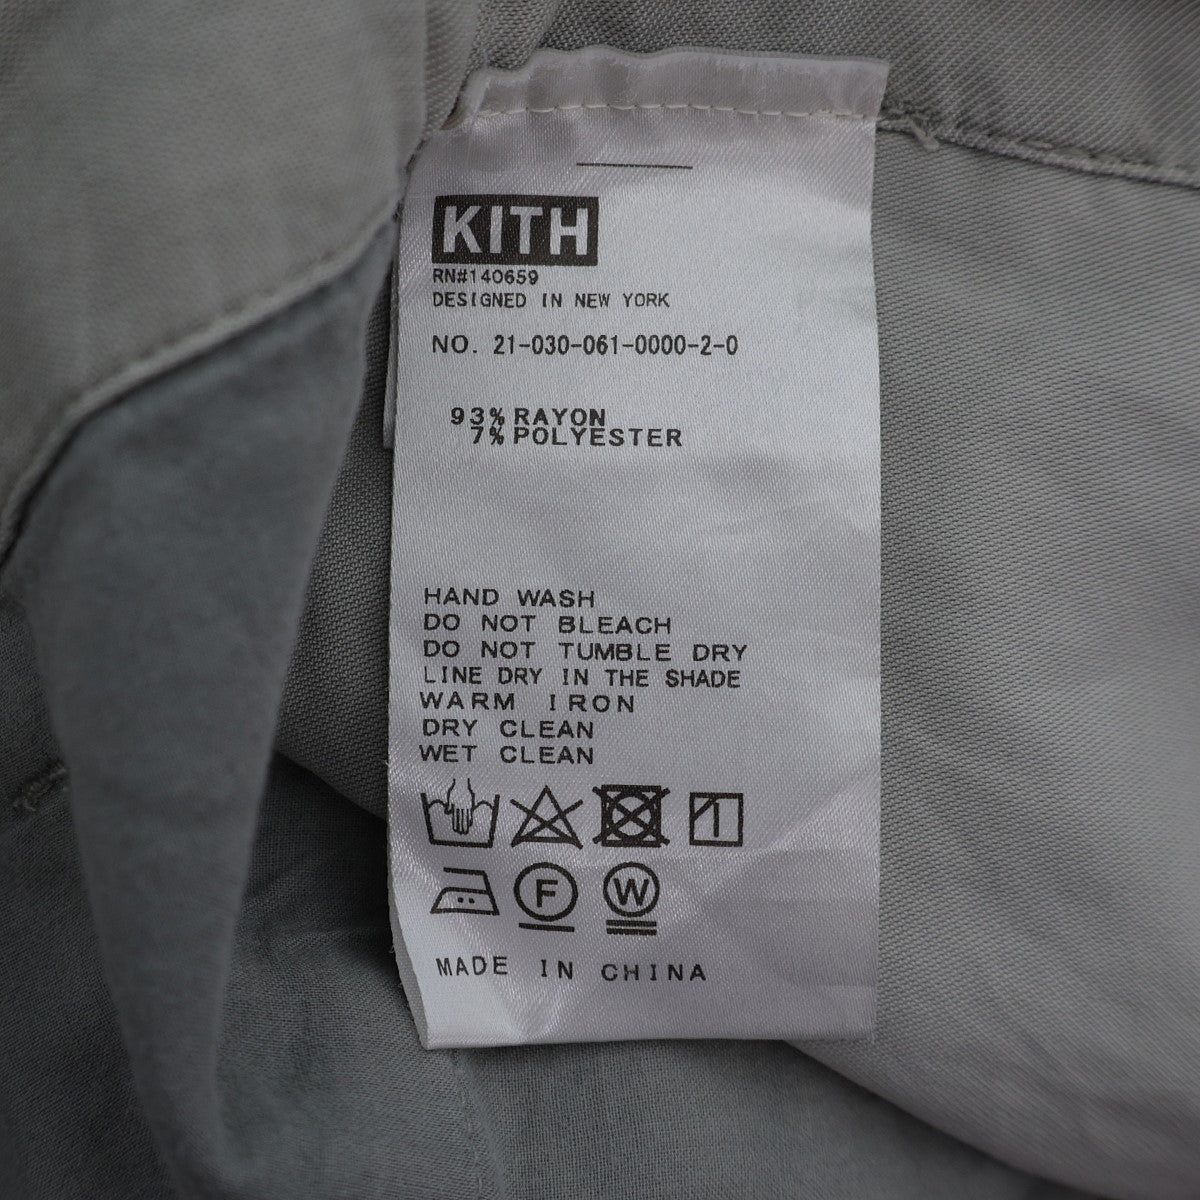 KITH(キス) ベイカーパンツ ライトカーキグレー系 サイズ S｜【公式】カインドオルオンライン ブランド古着・中古通販【kindal】